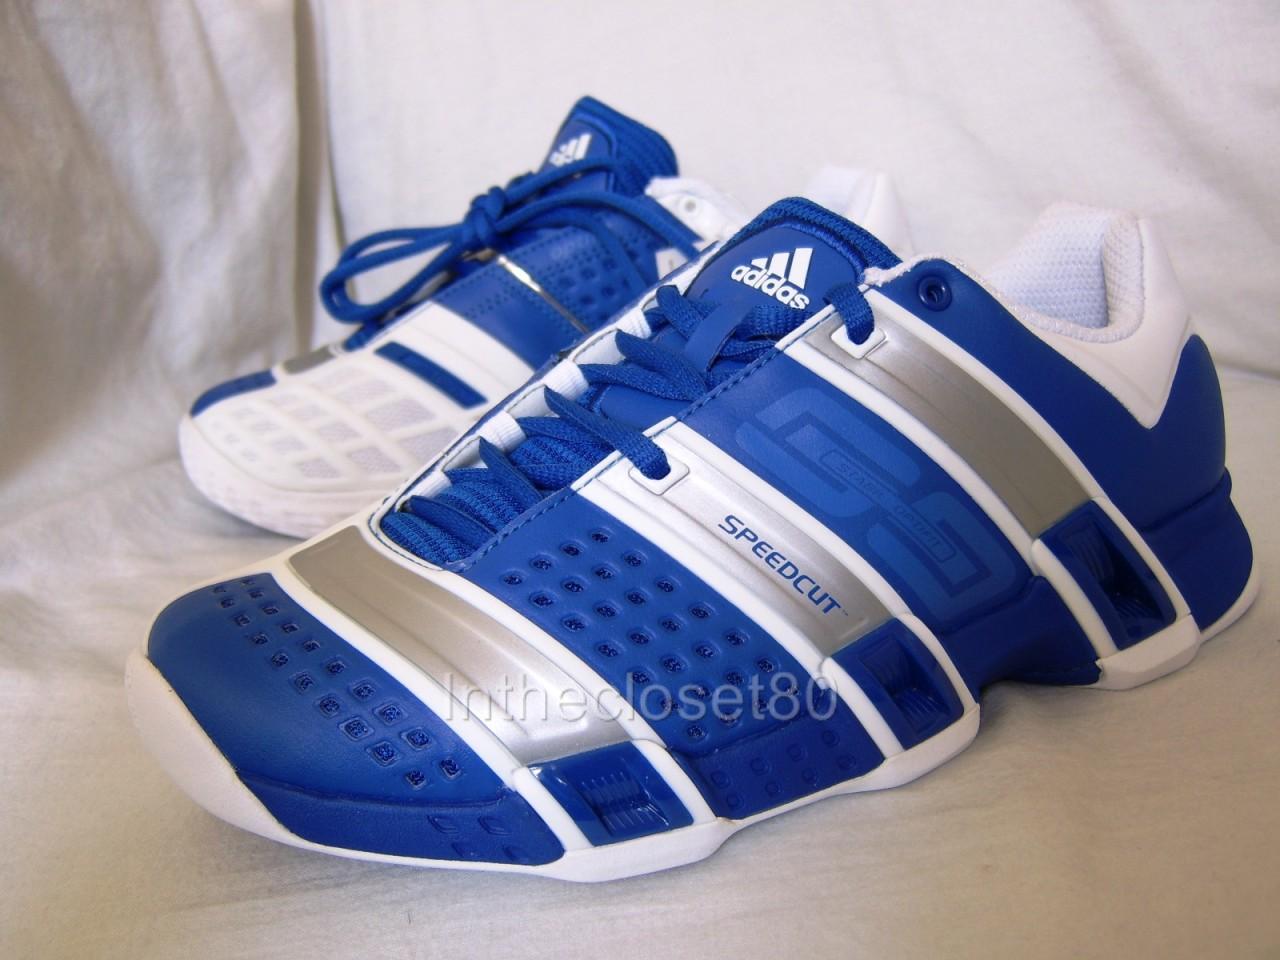 Adidas stabil 2000 год